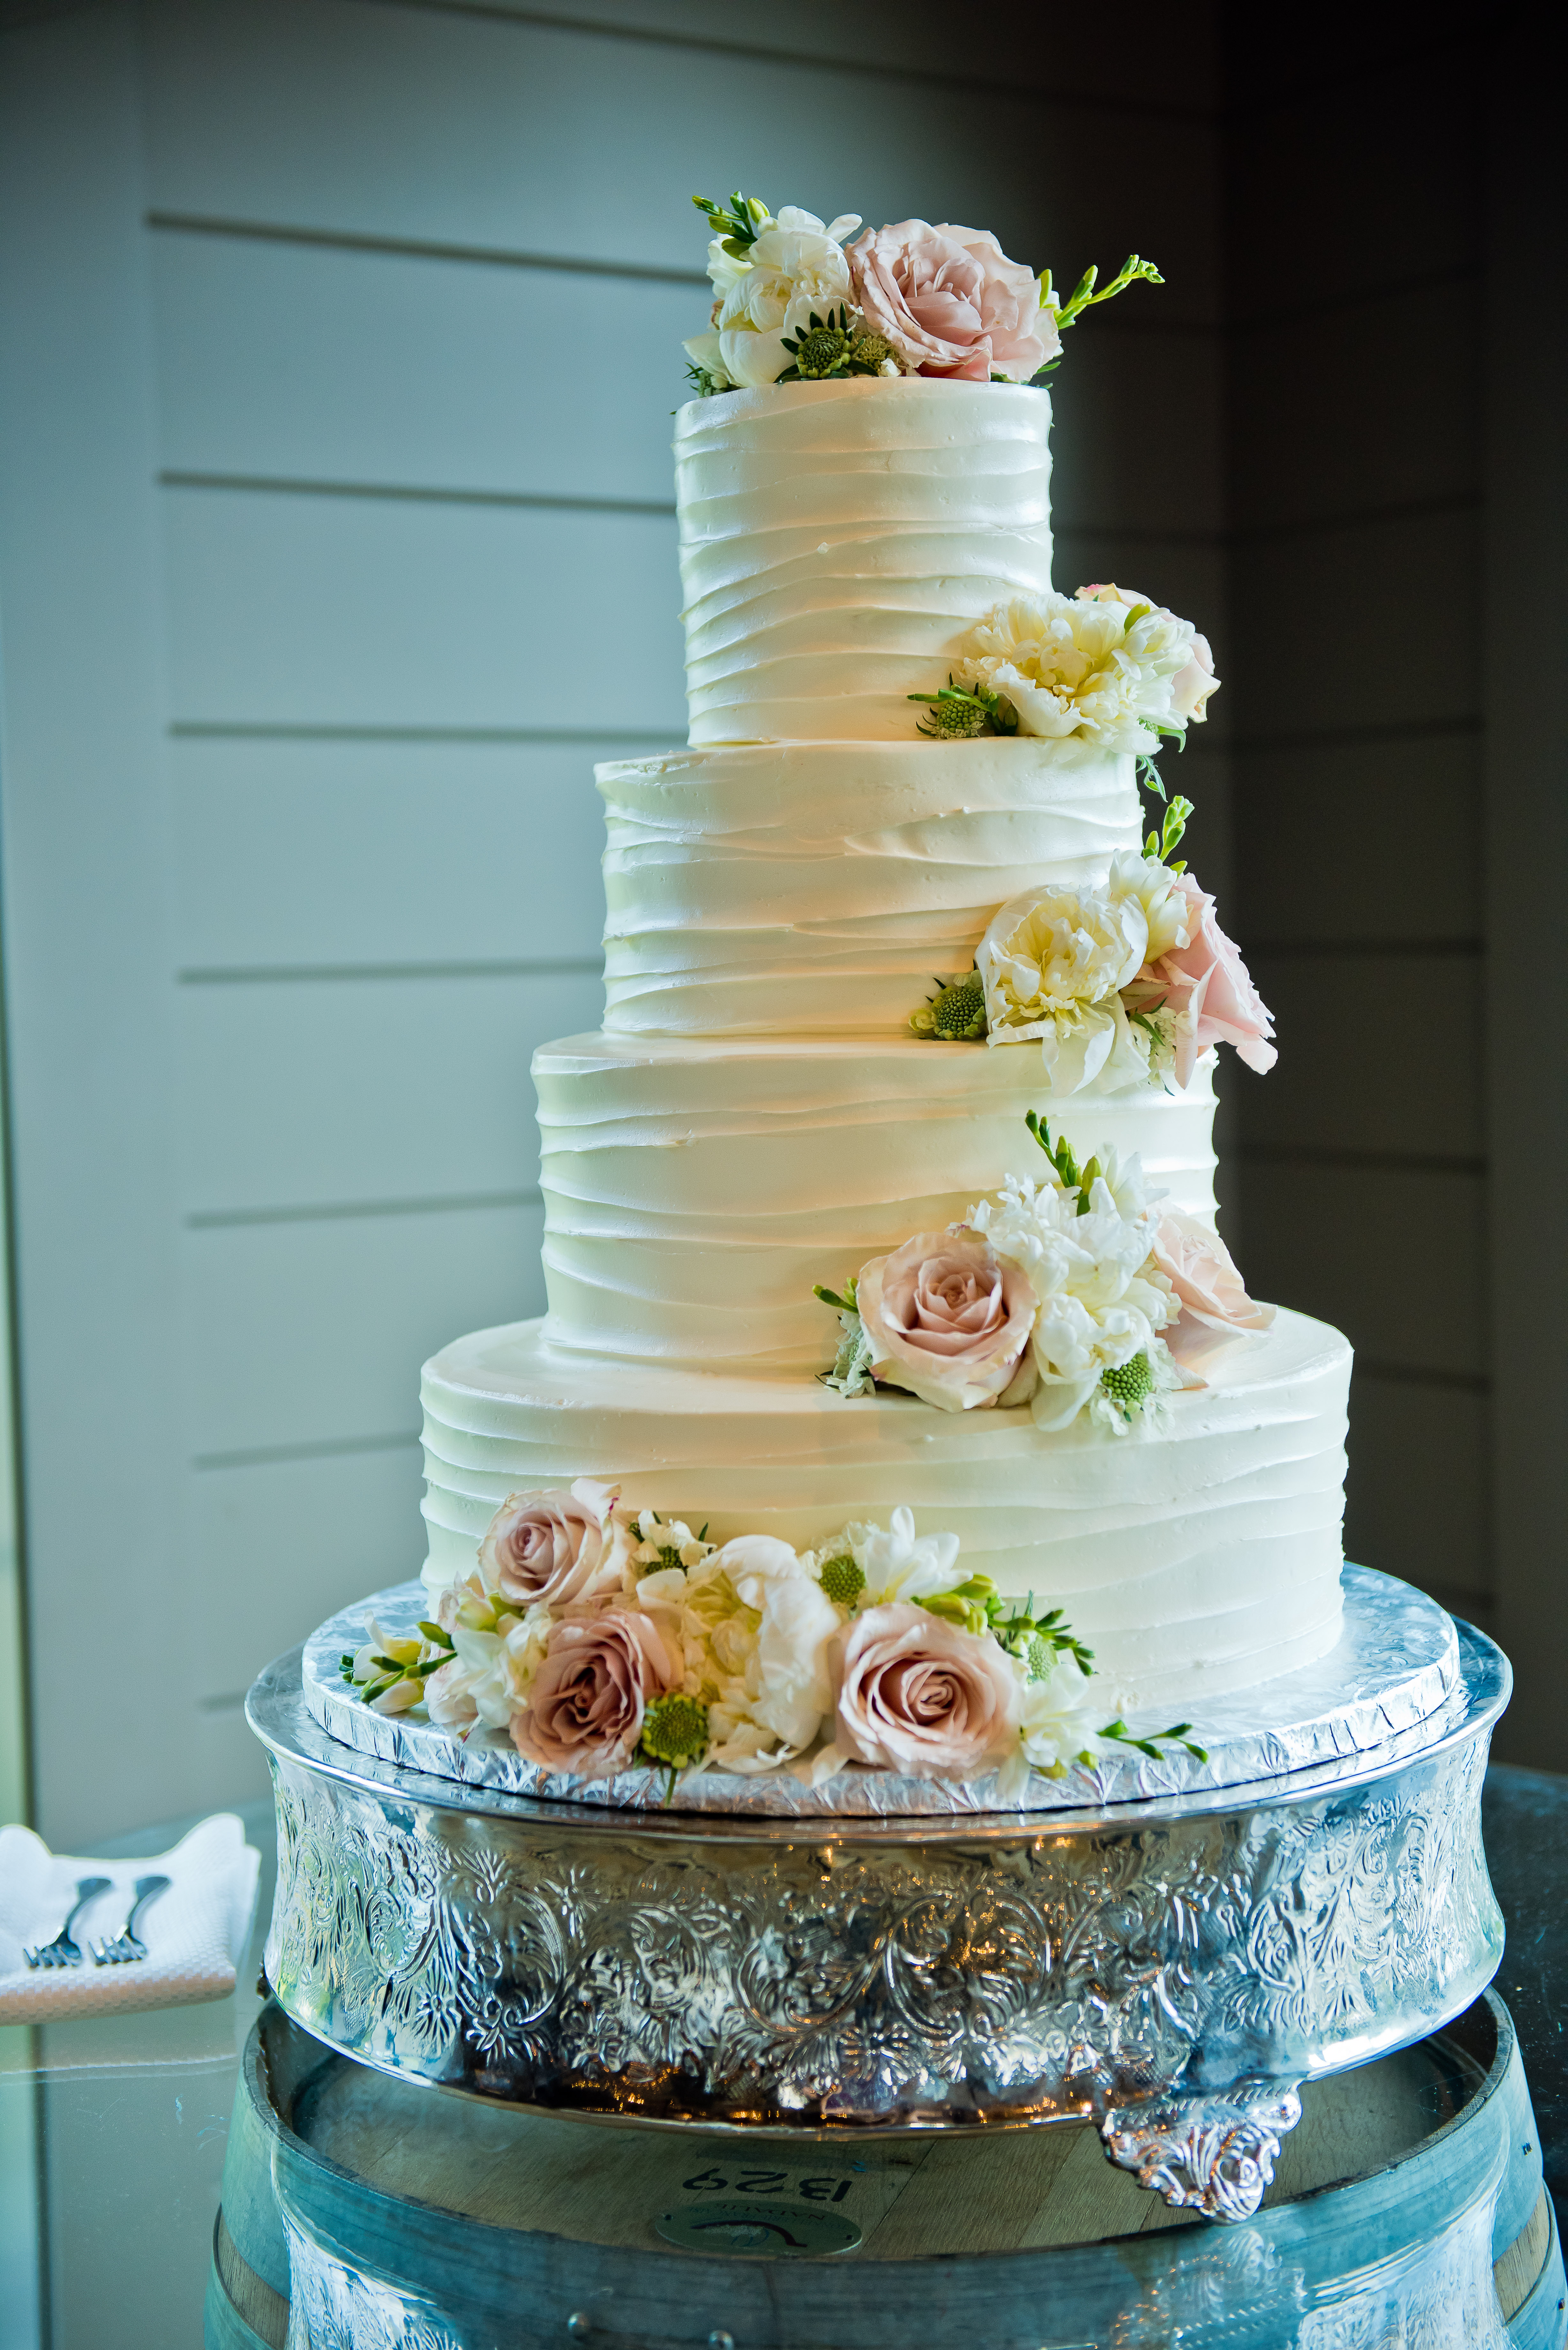 Vineyard summer wedding cake with flowers